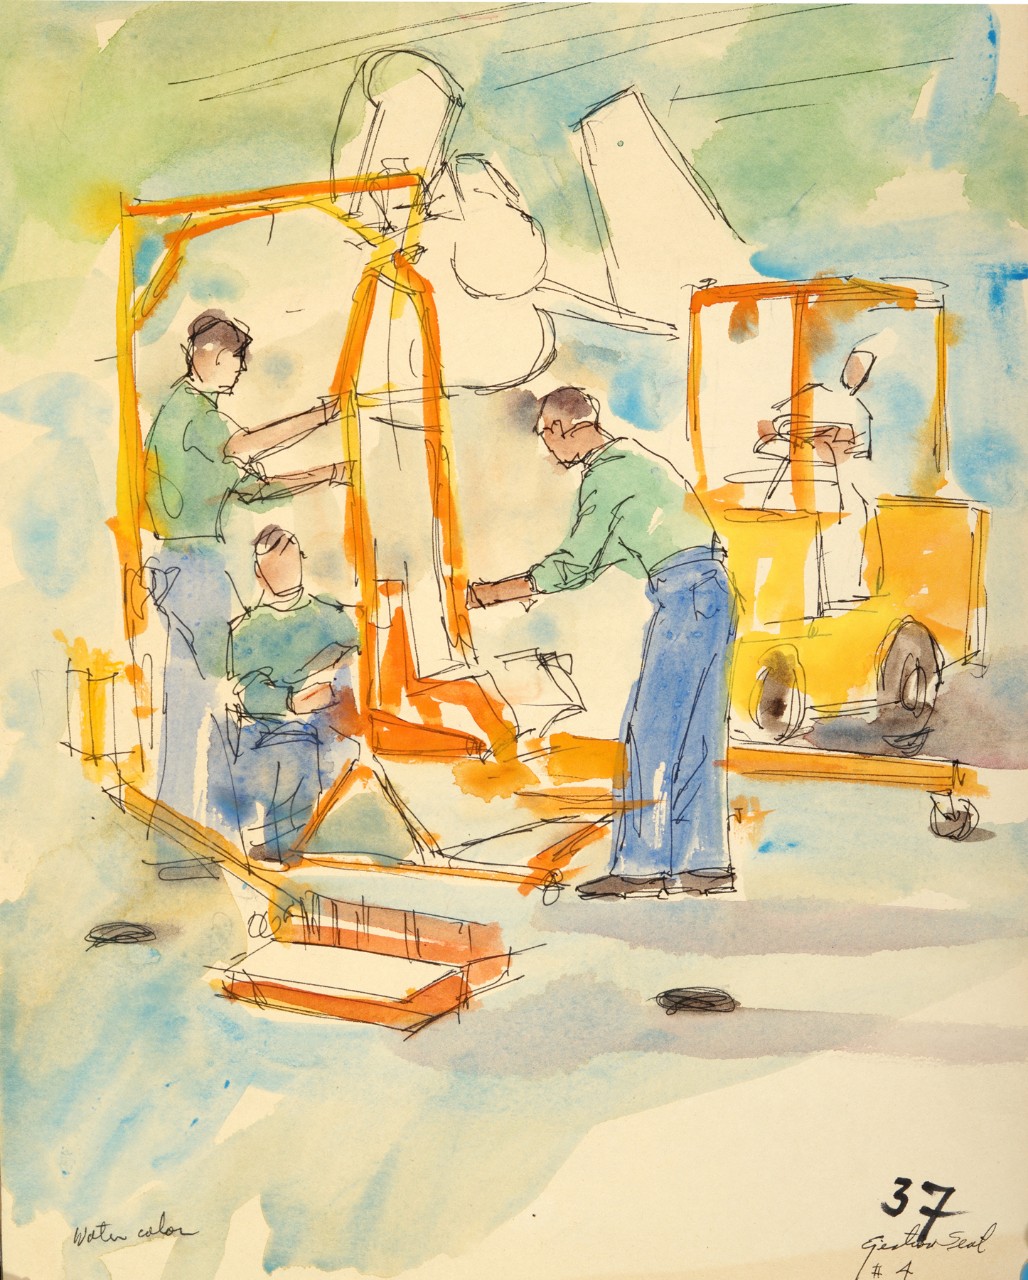 Three crewmen work on an ejector seat 